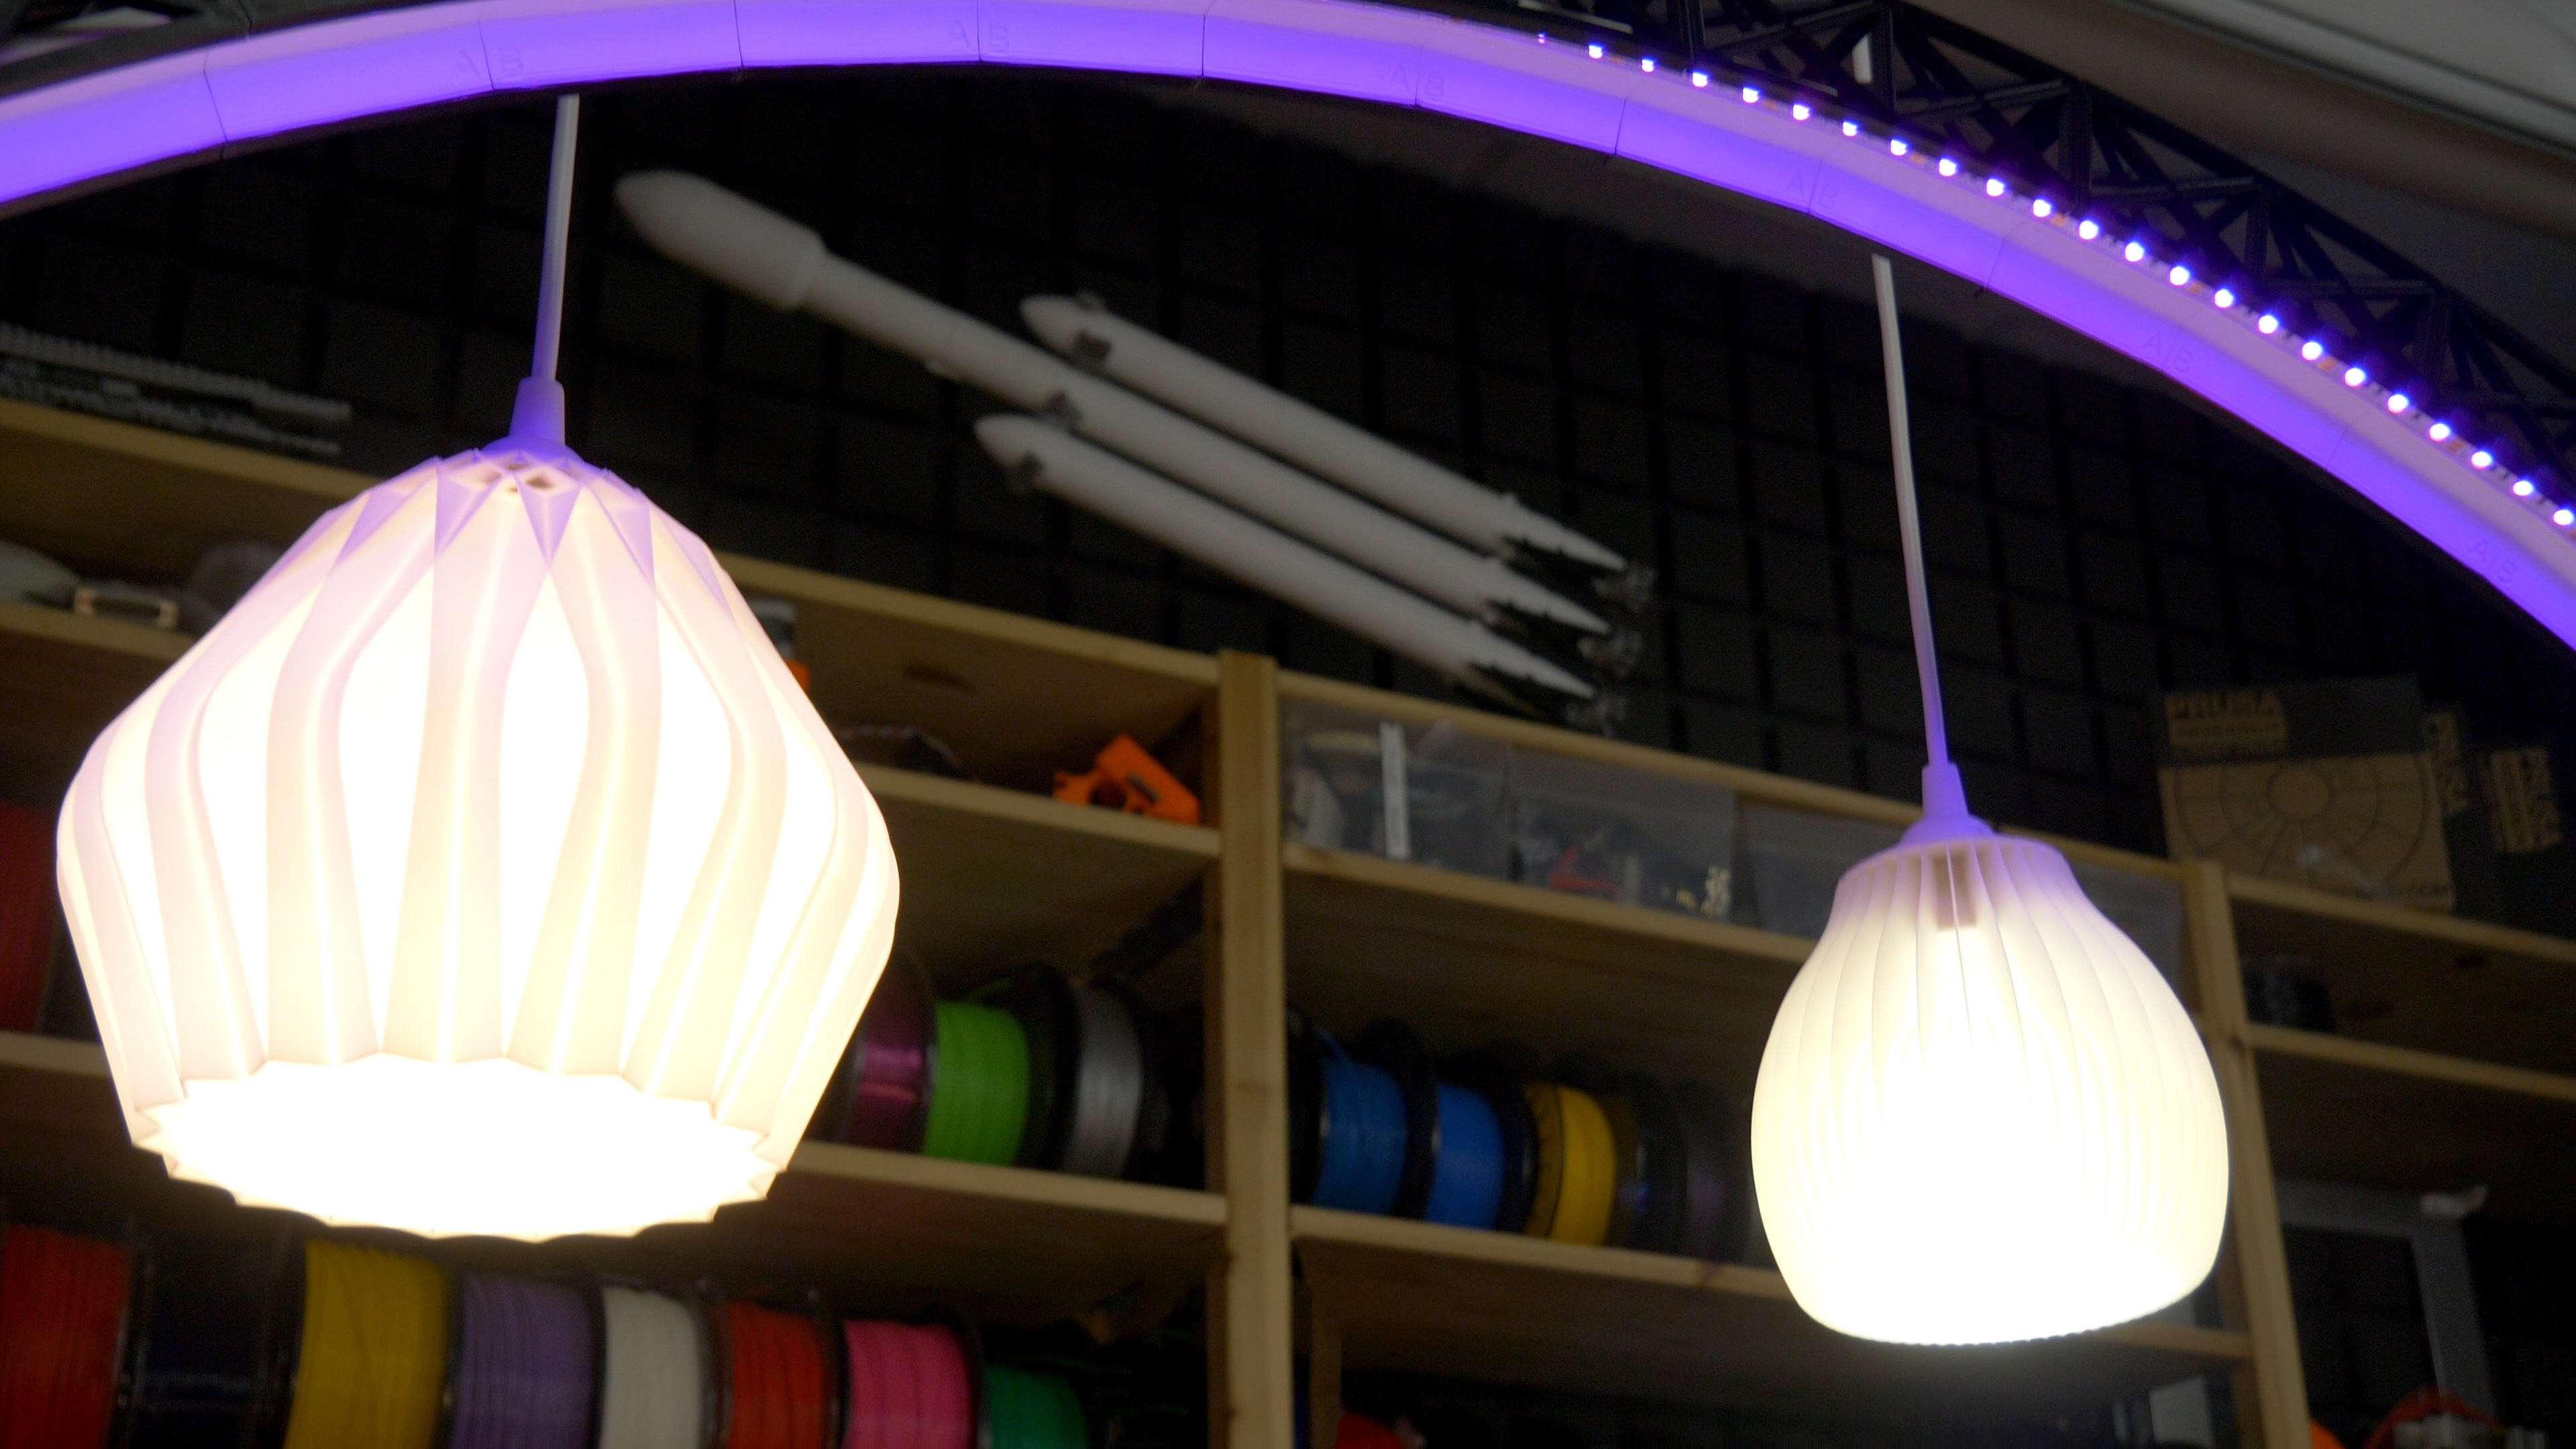 Light up your 3D prints with LEDs and bulbs! - Original Prusa 3D Printers